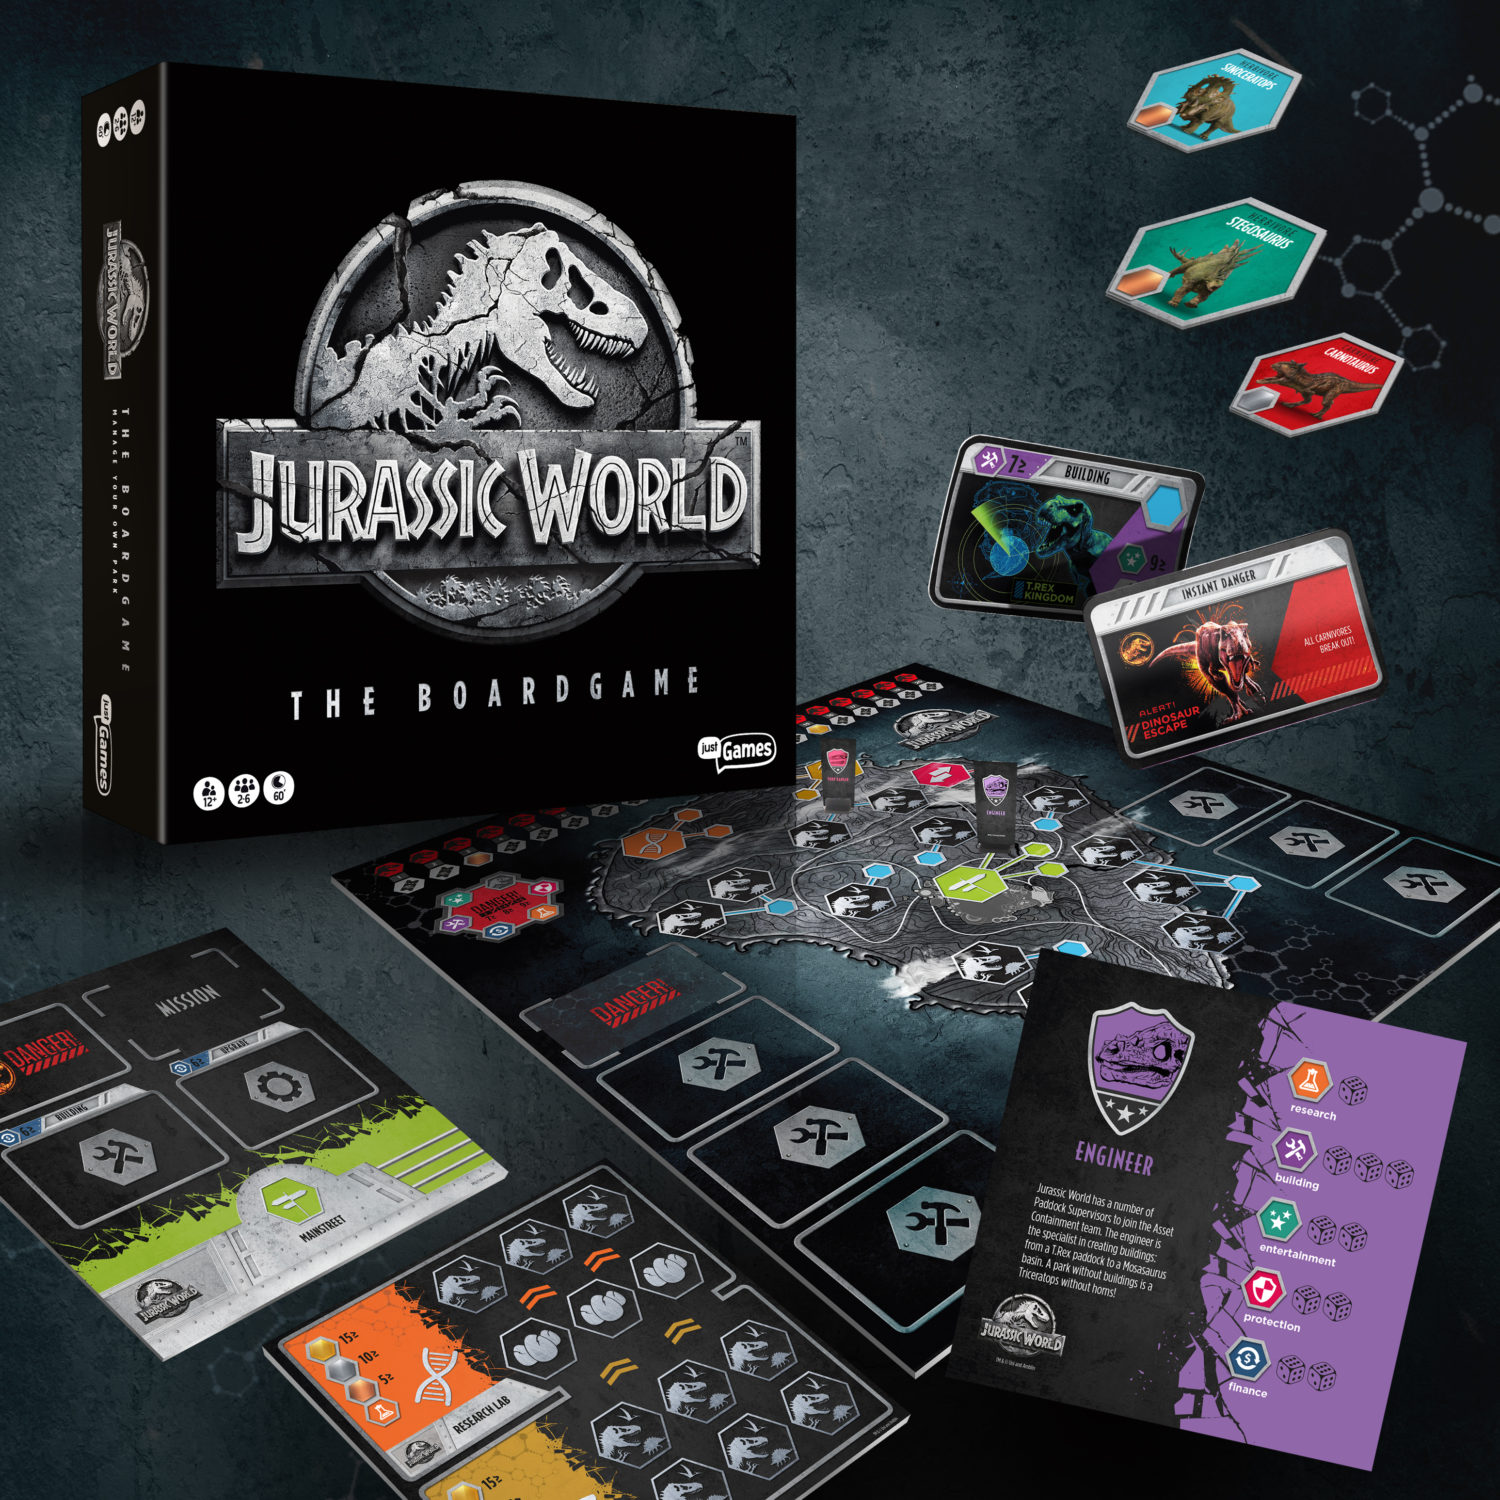 The Boardgame Jurassic World Brand New & Sealed 